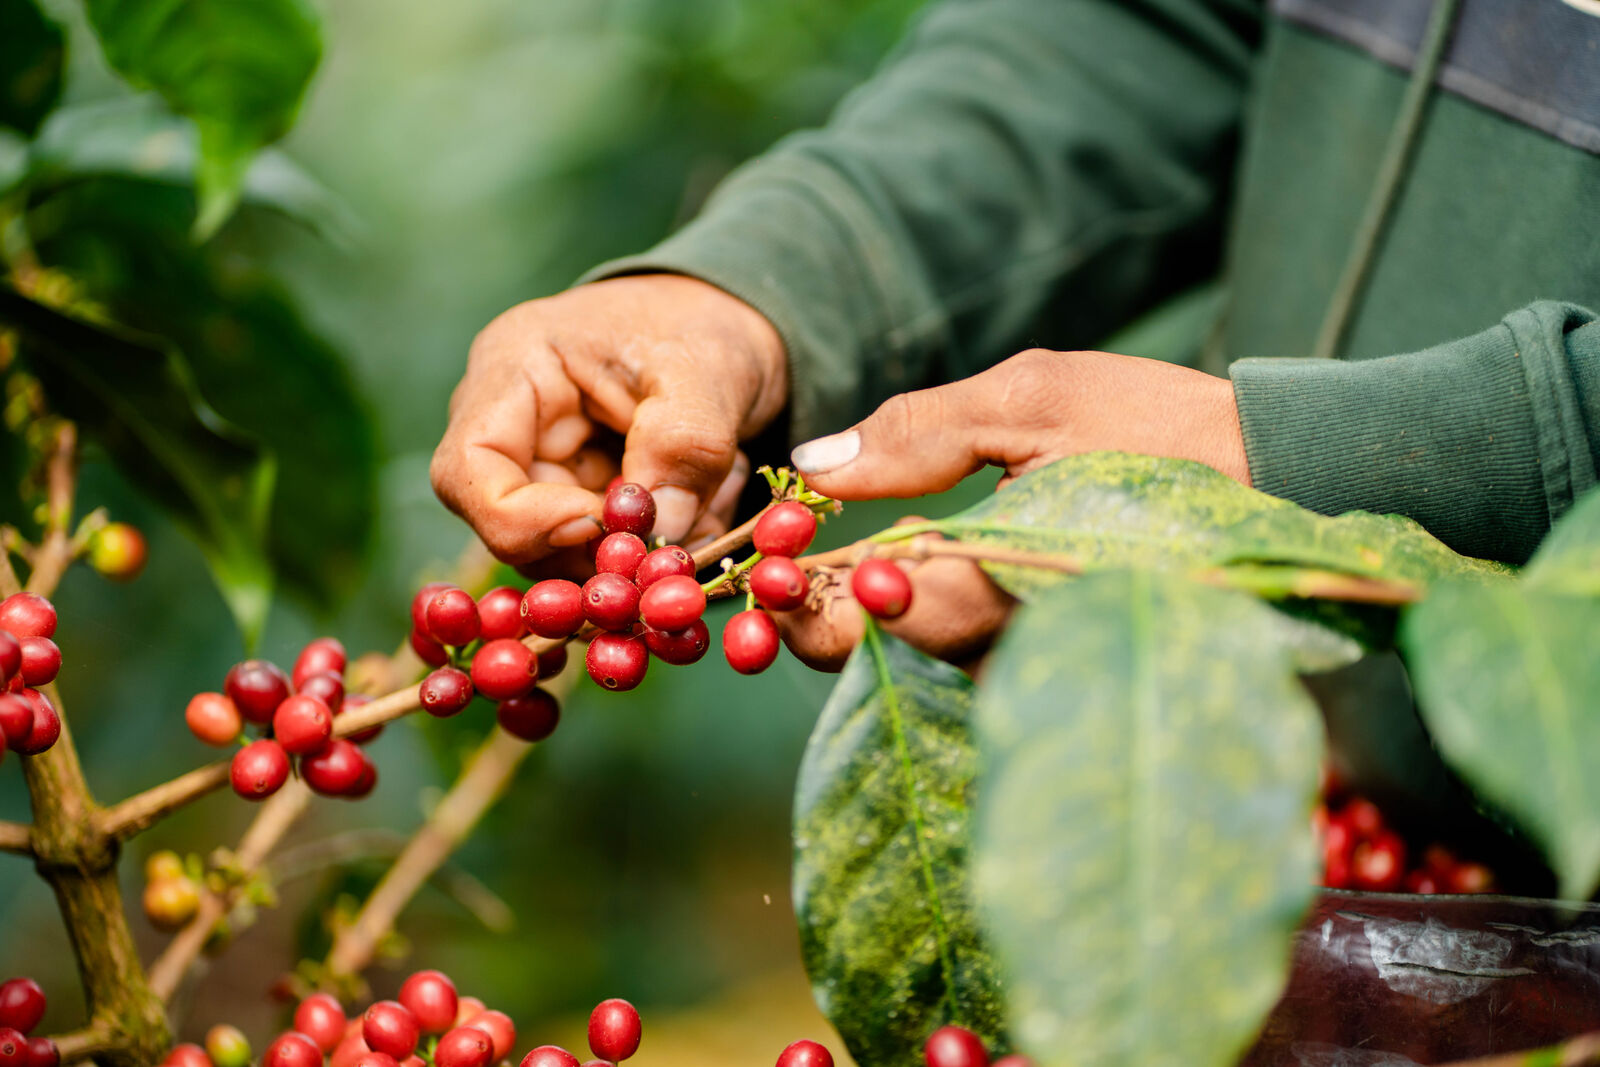 Honduran Rainforest Alliance SHG EP Green Coffee Beans from Mercon Specialty